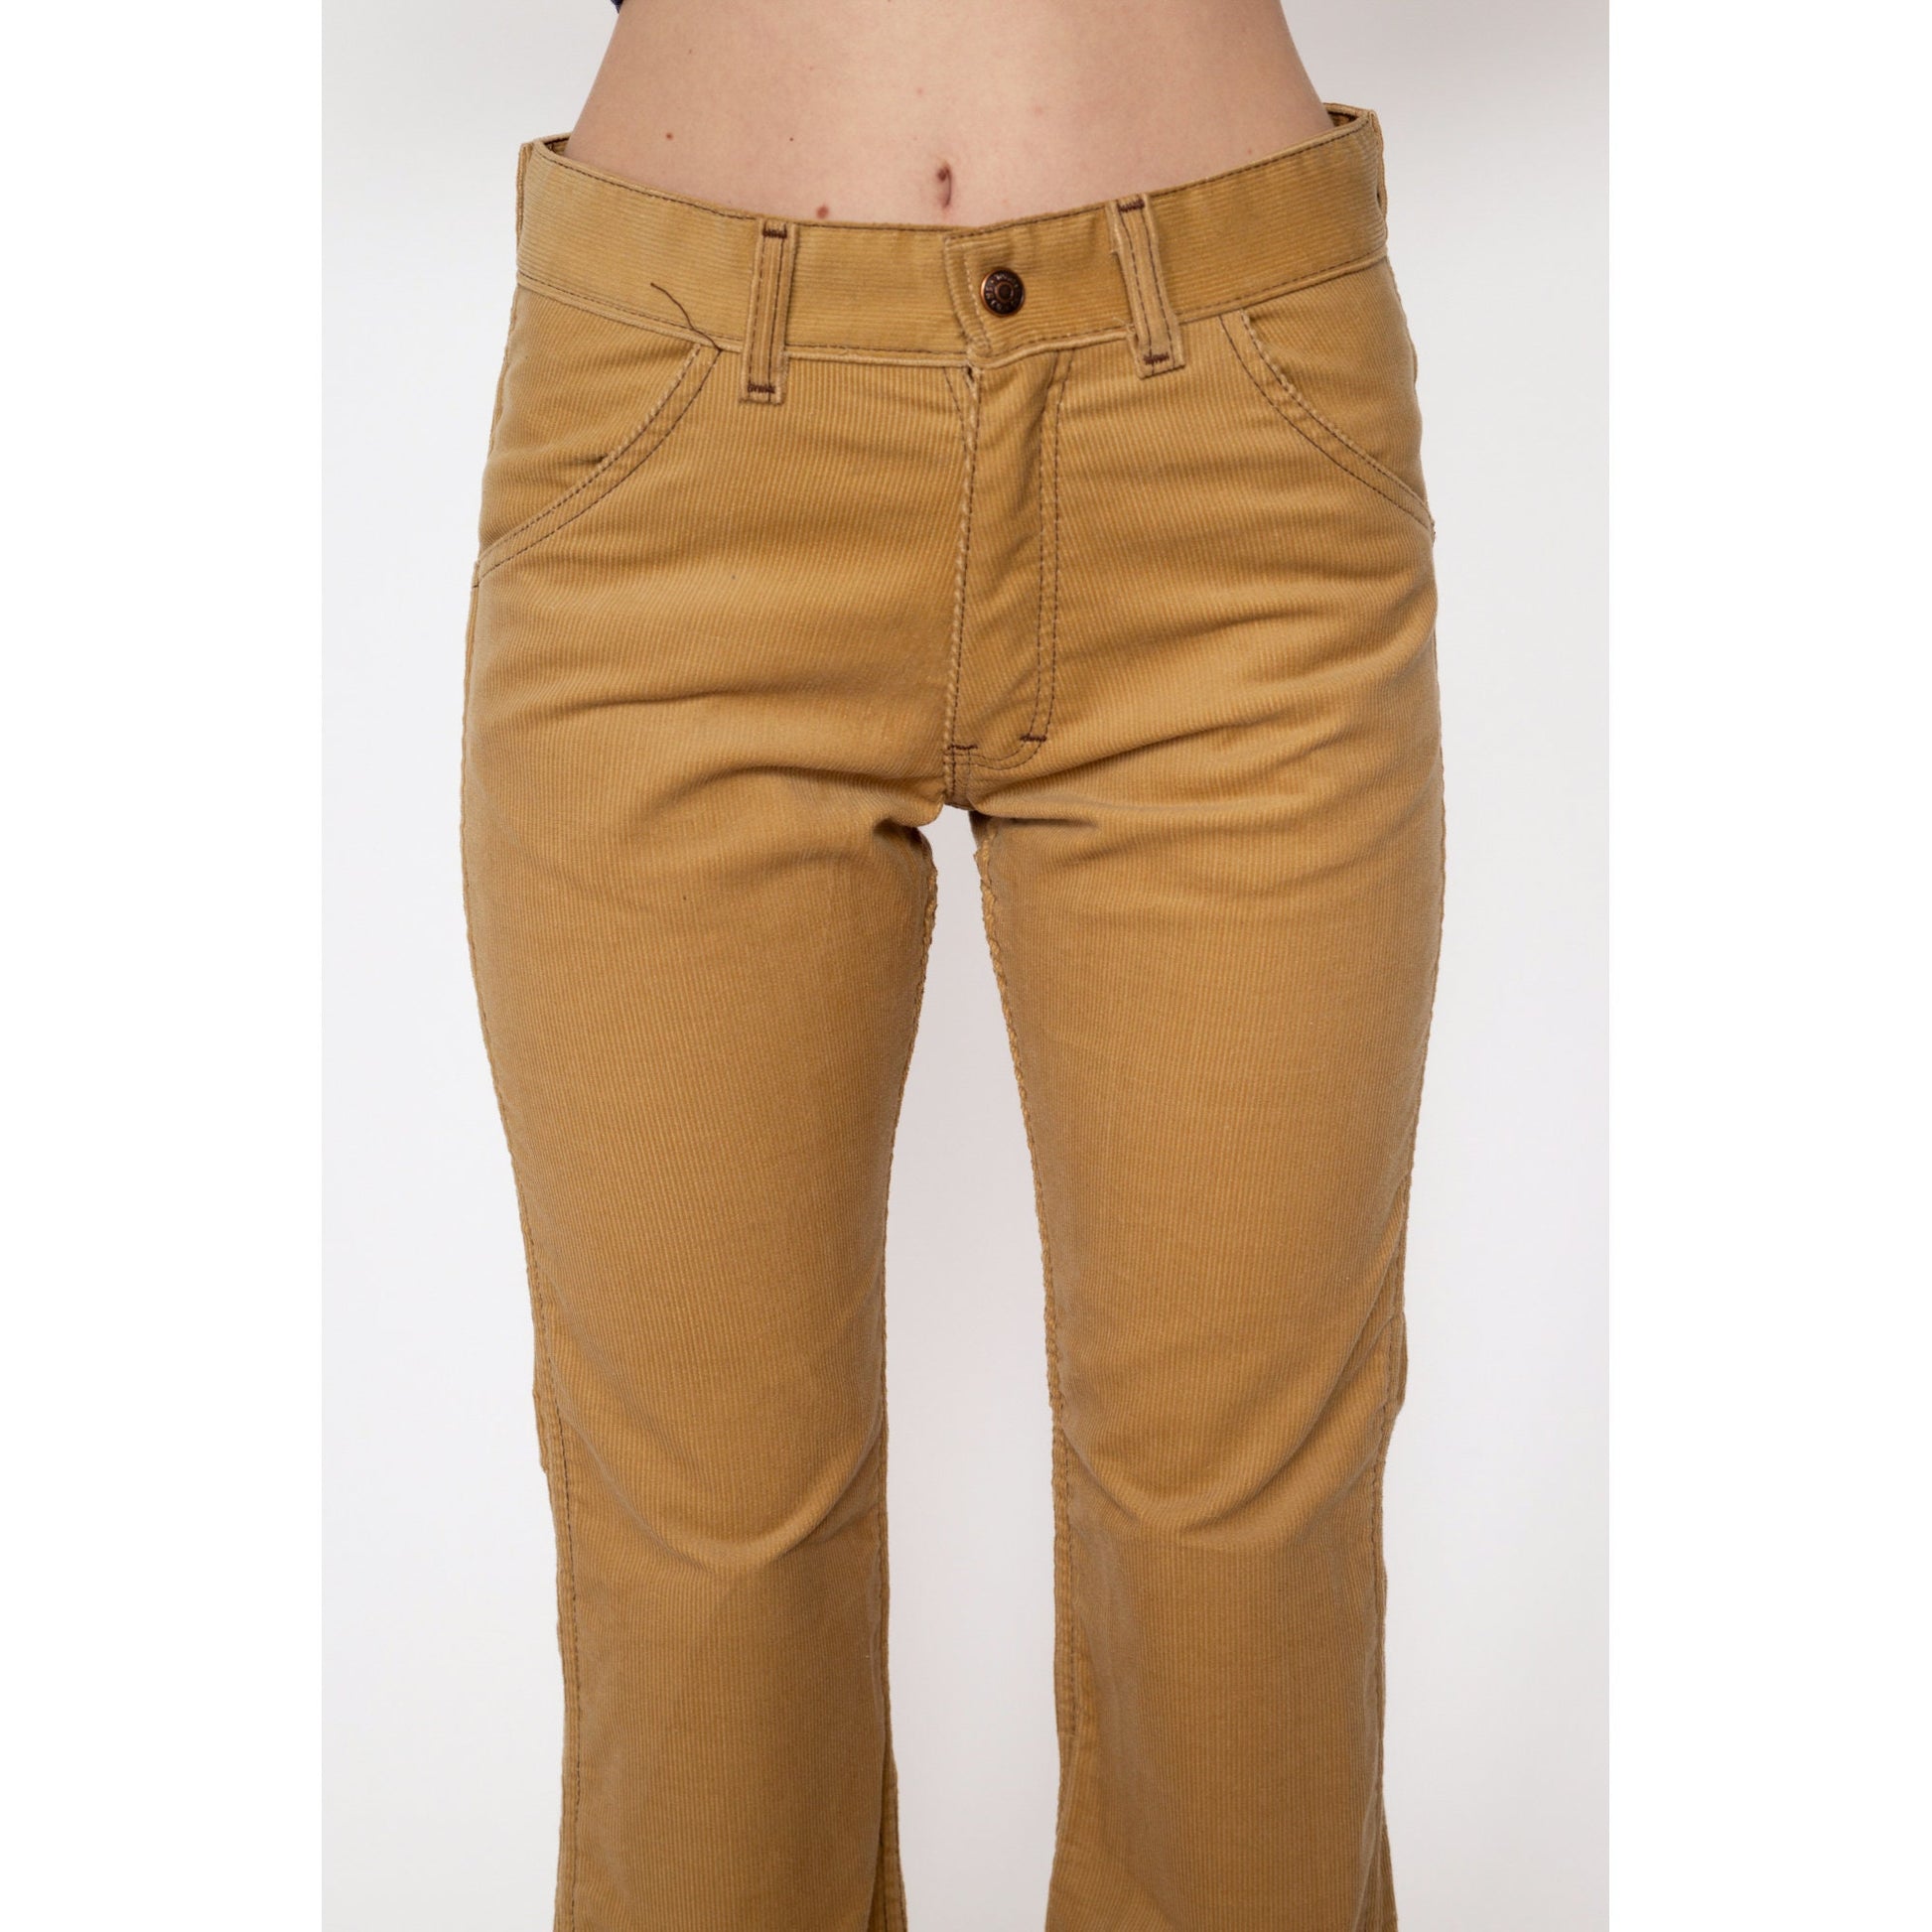 XS 70s Tan Corduroy Mid Rise Flared Pants | Vintage Sears Toughskins Cords Retro Hippie Trousers